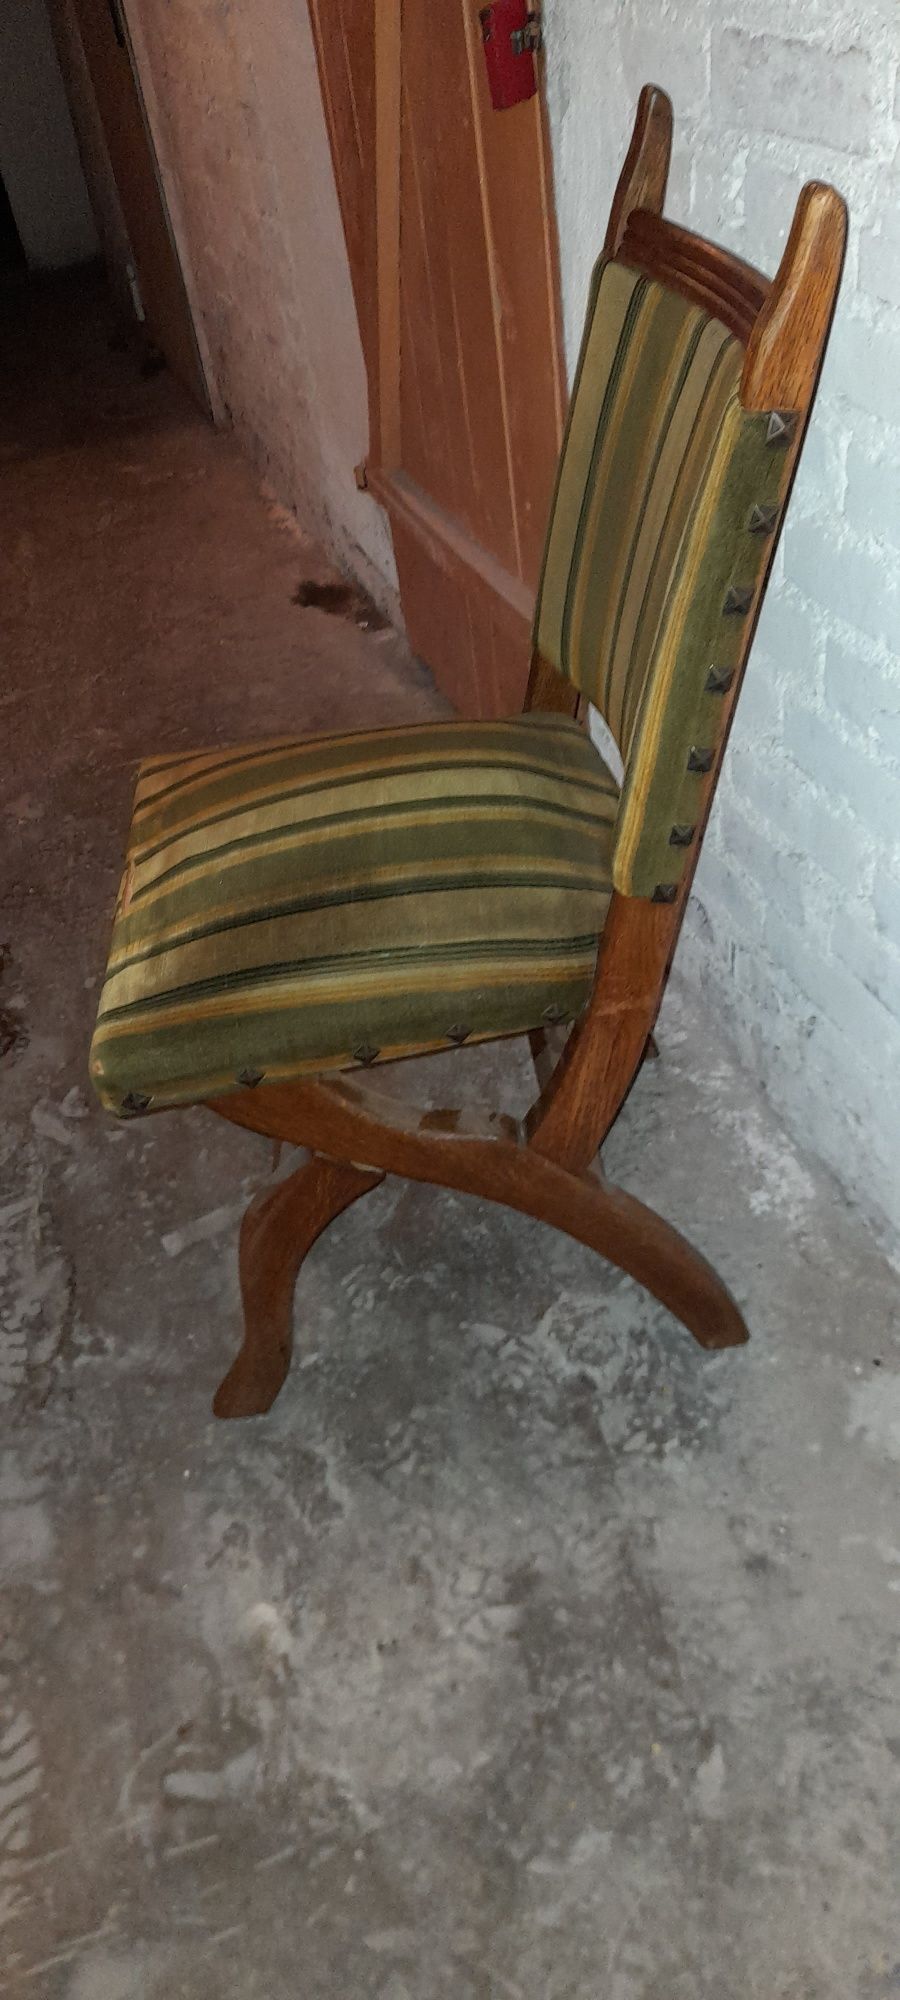 Krzeslo debowe do renowacji